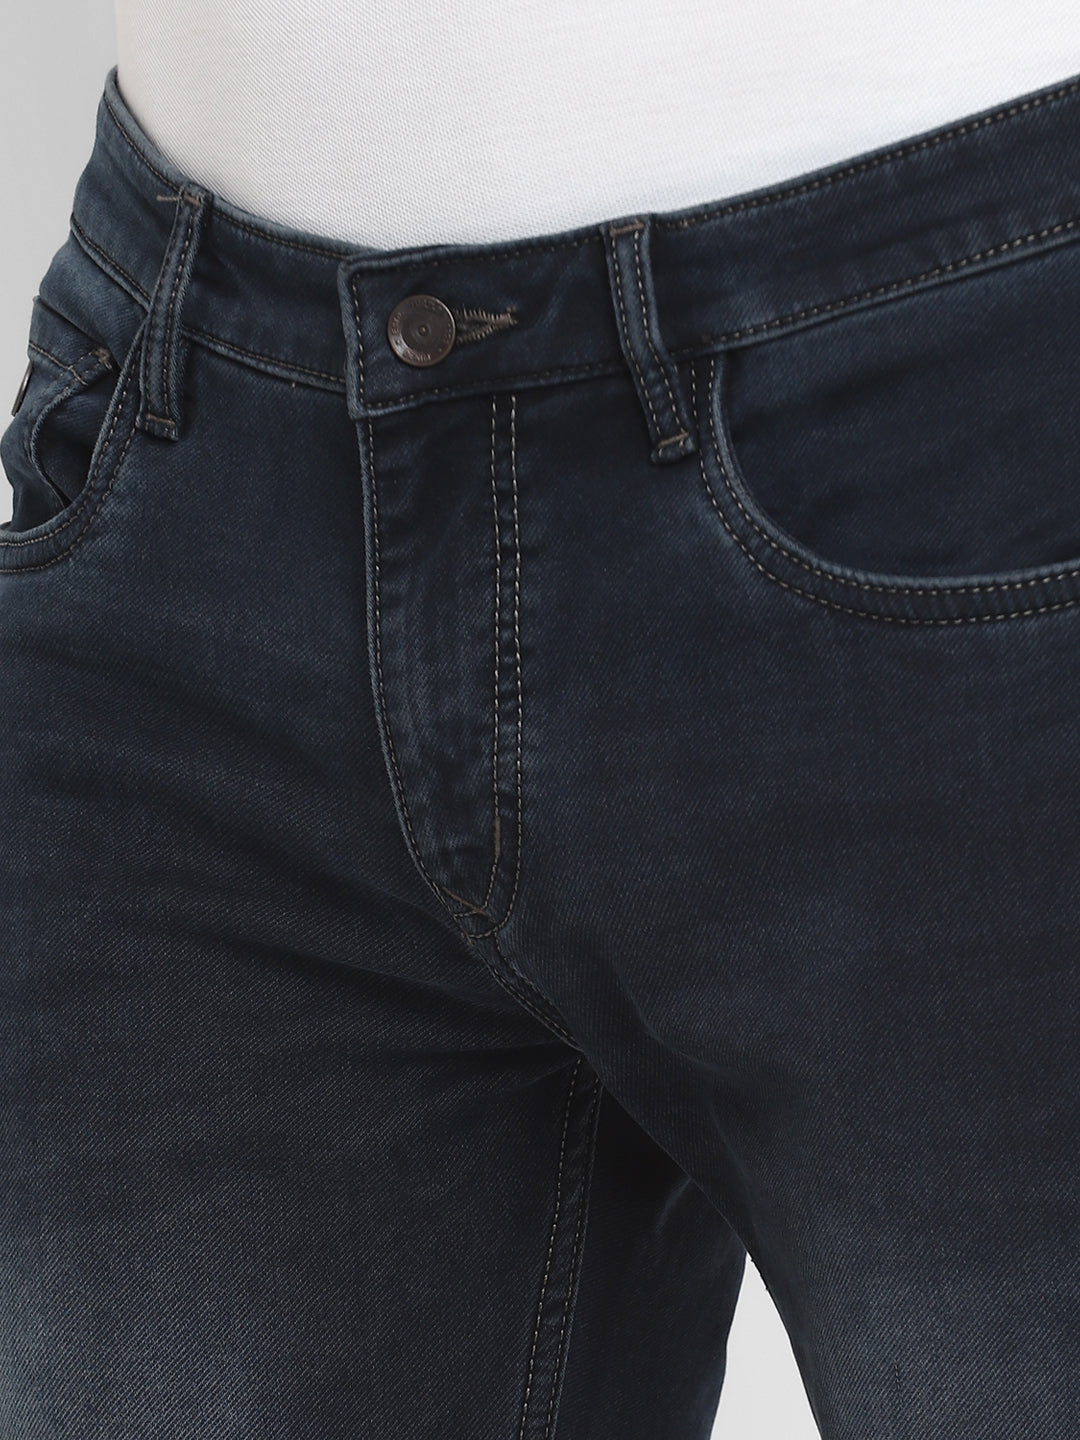 Blue Narrow Fit Cotton Stretch Jeans